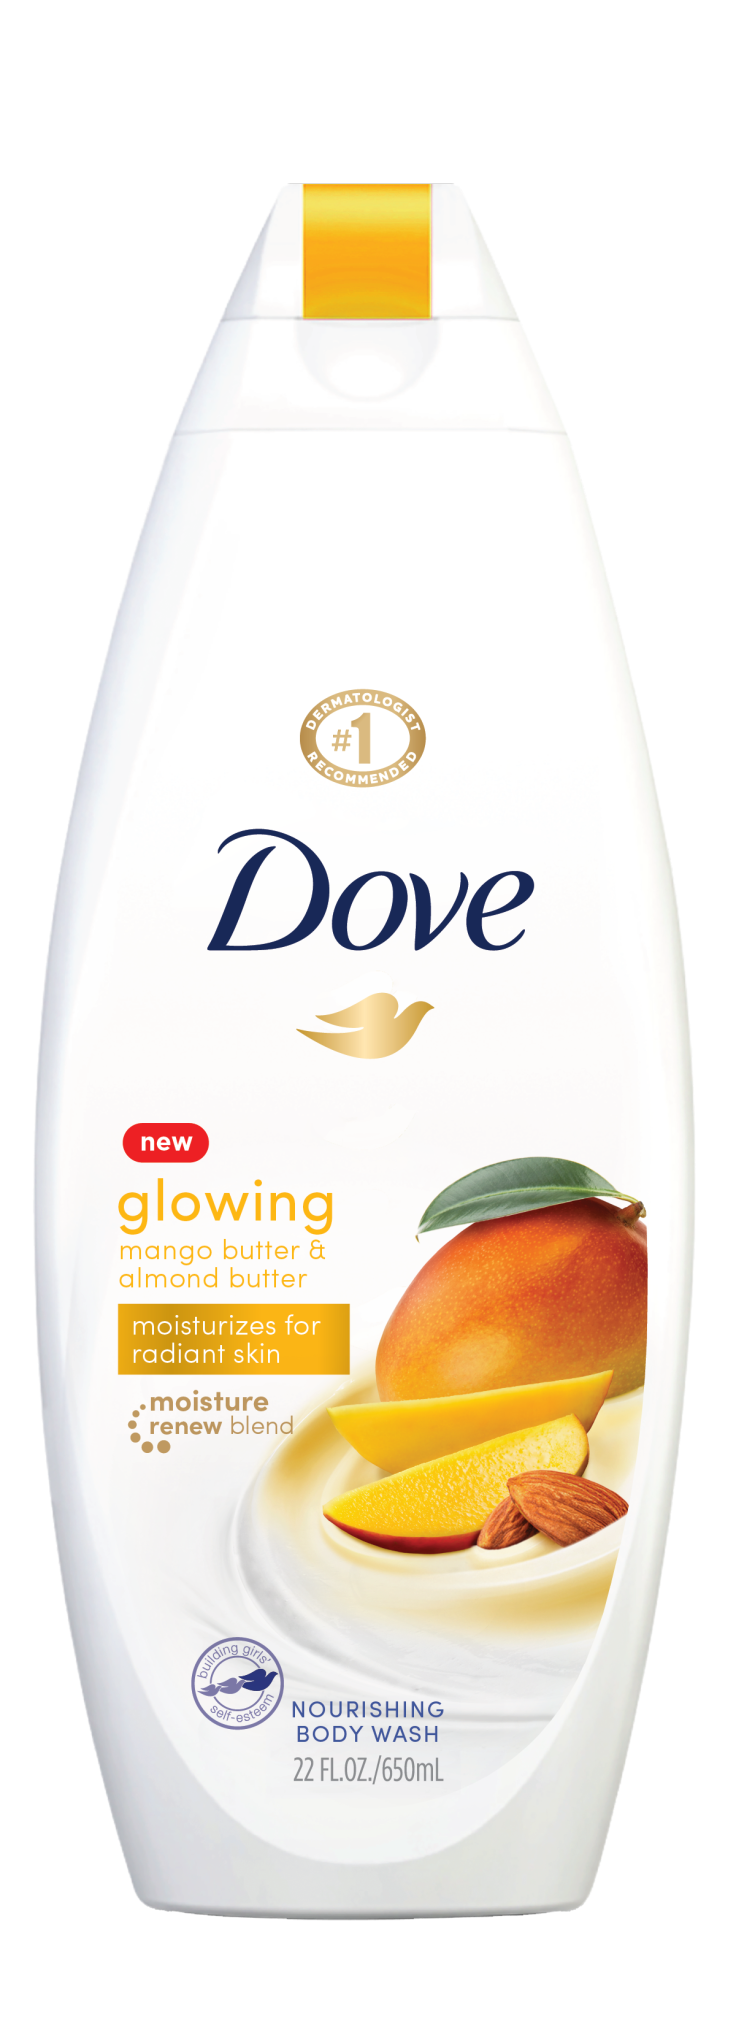 Dove Glowing Body Wash